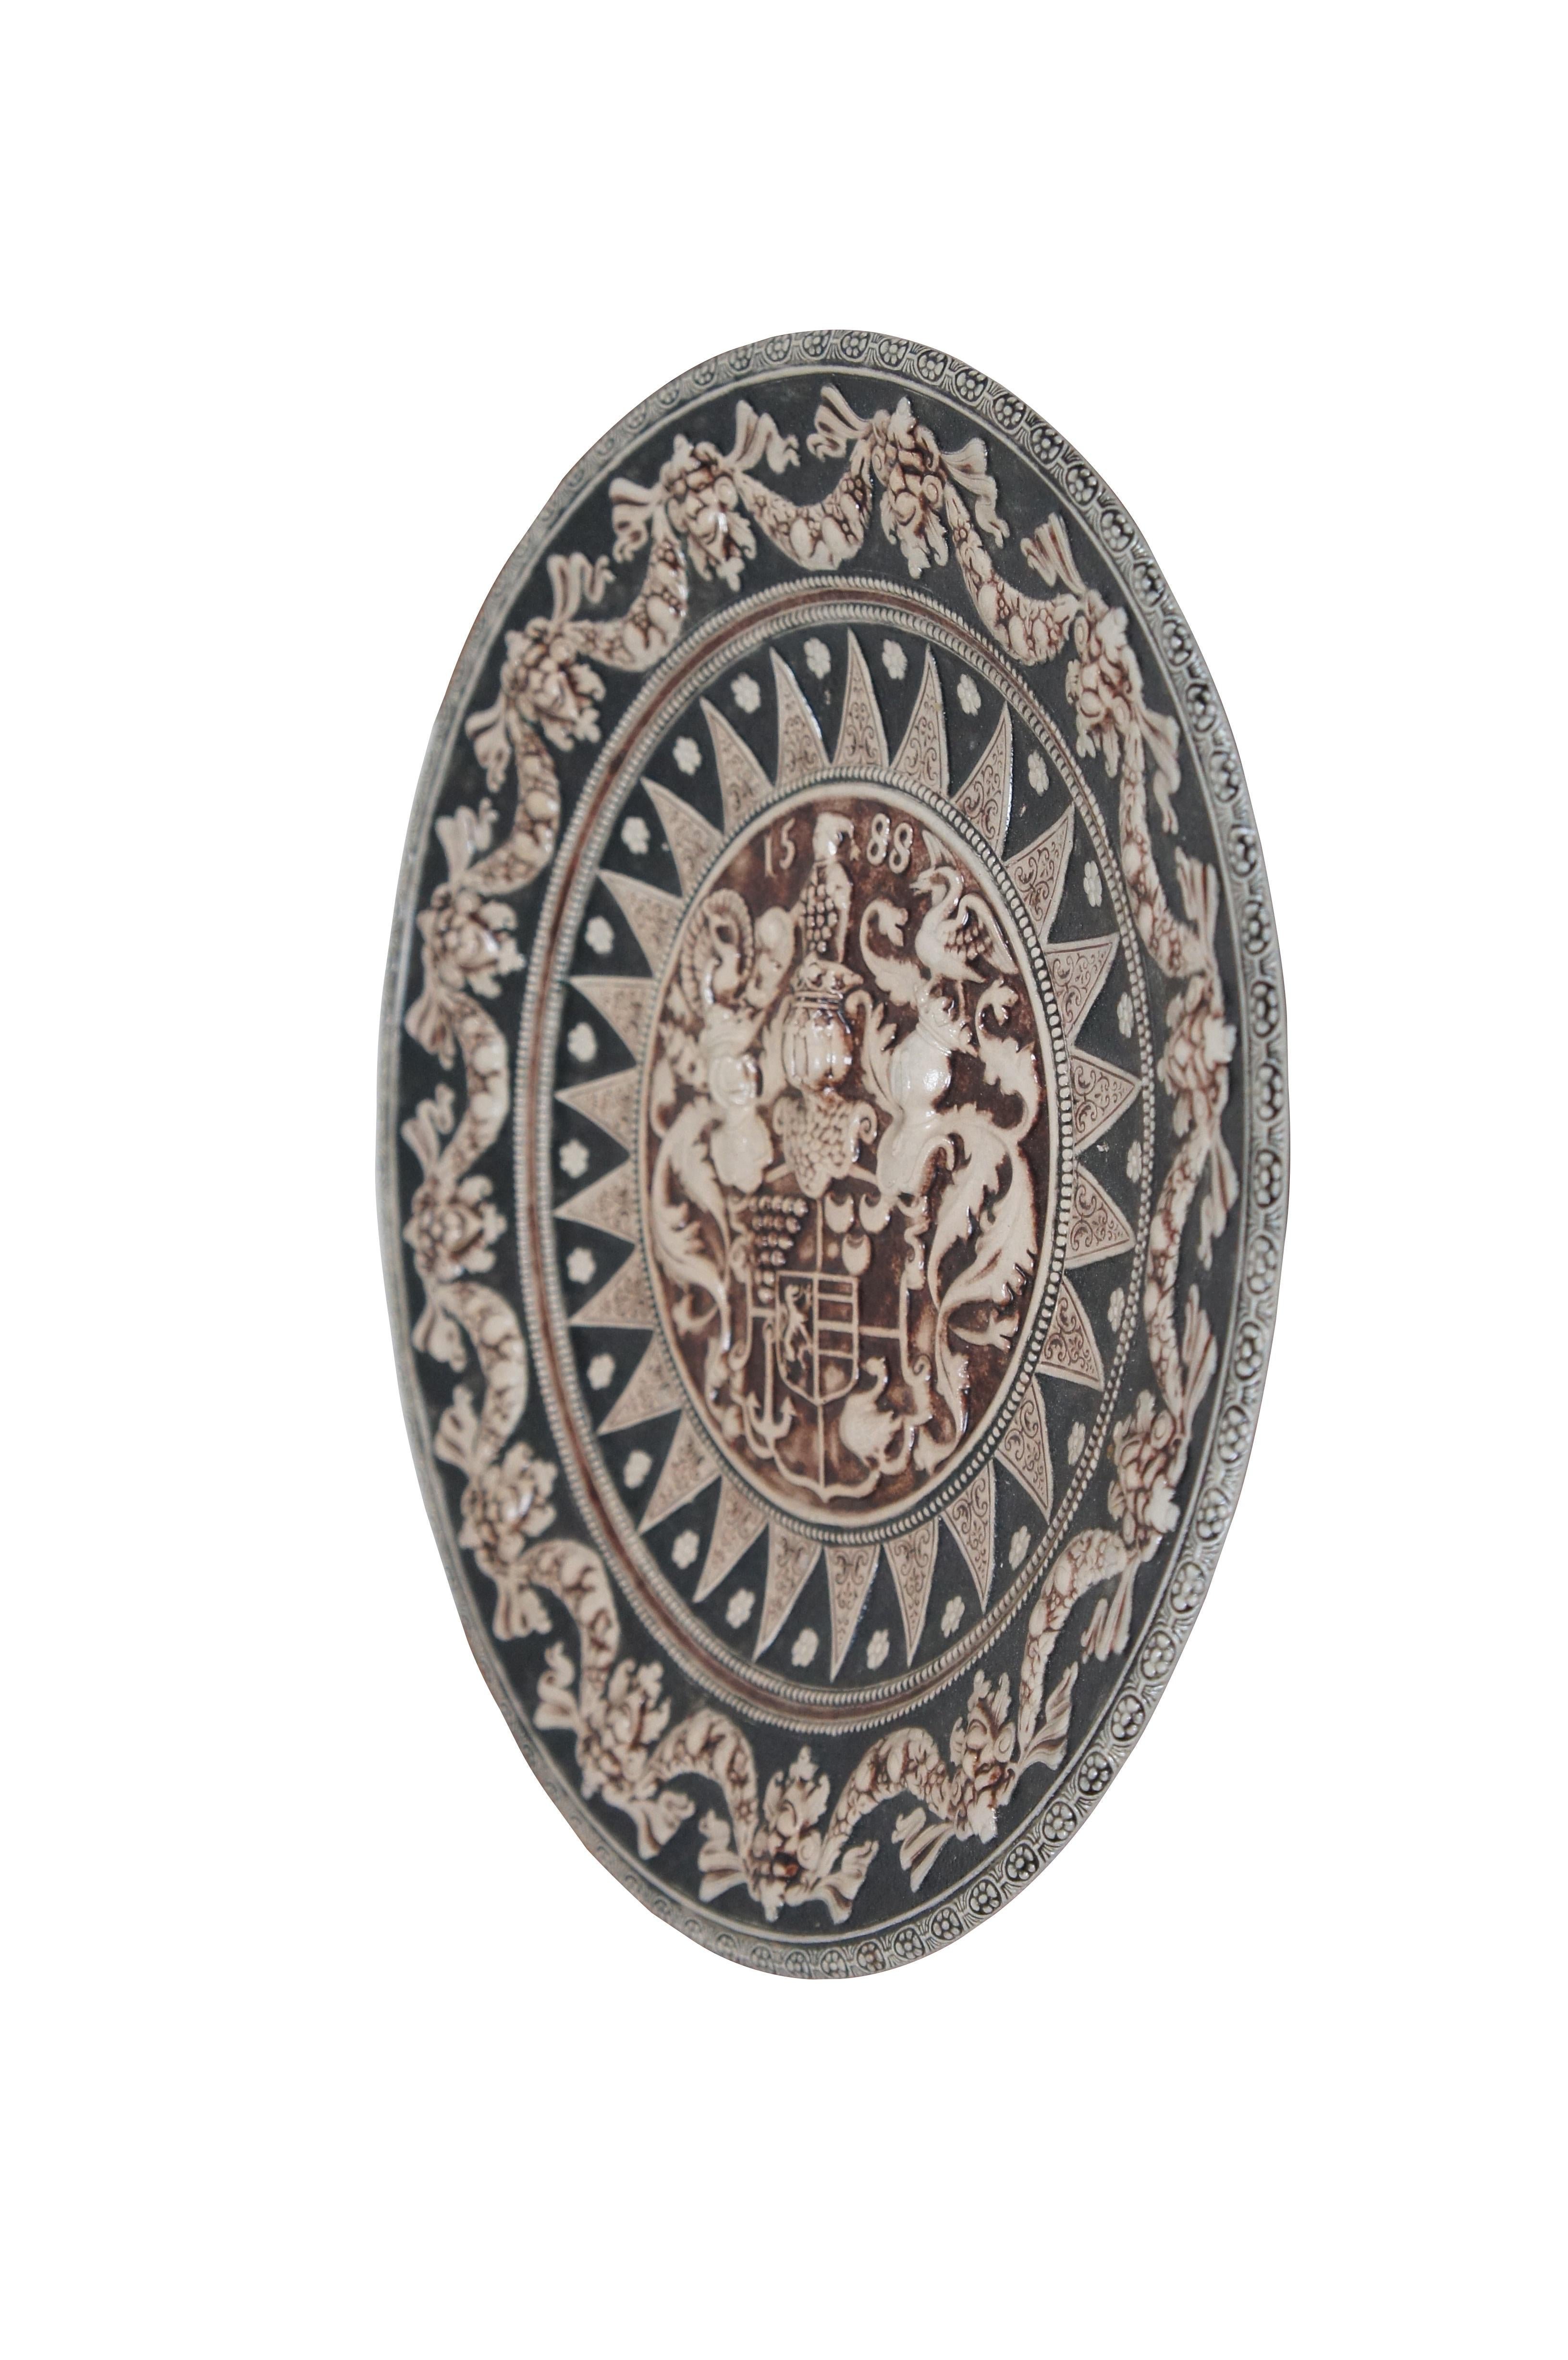 Black Forest German Westerwald Salt Glaze Stoneware Heraldic Coat of Arms Plate 1588 15